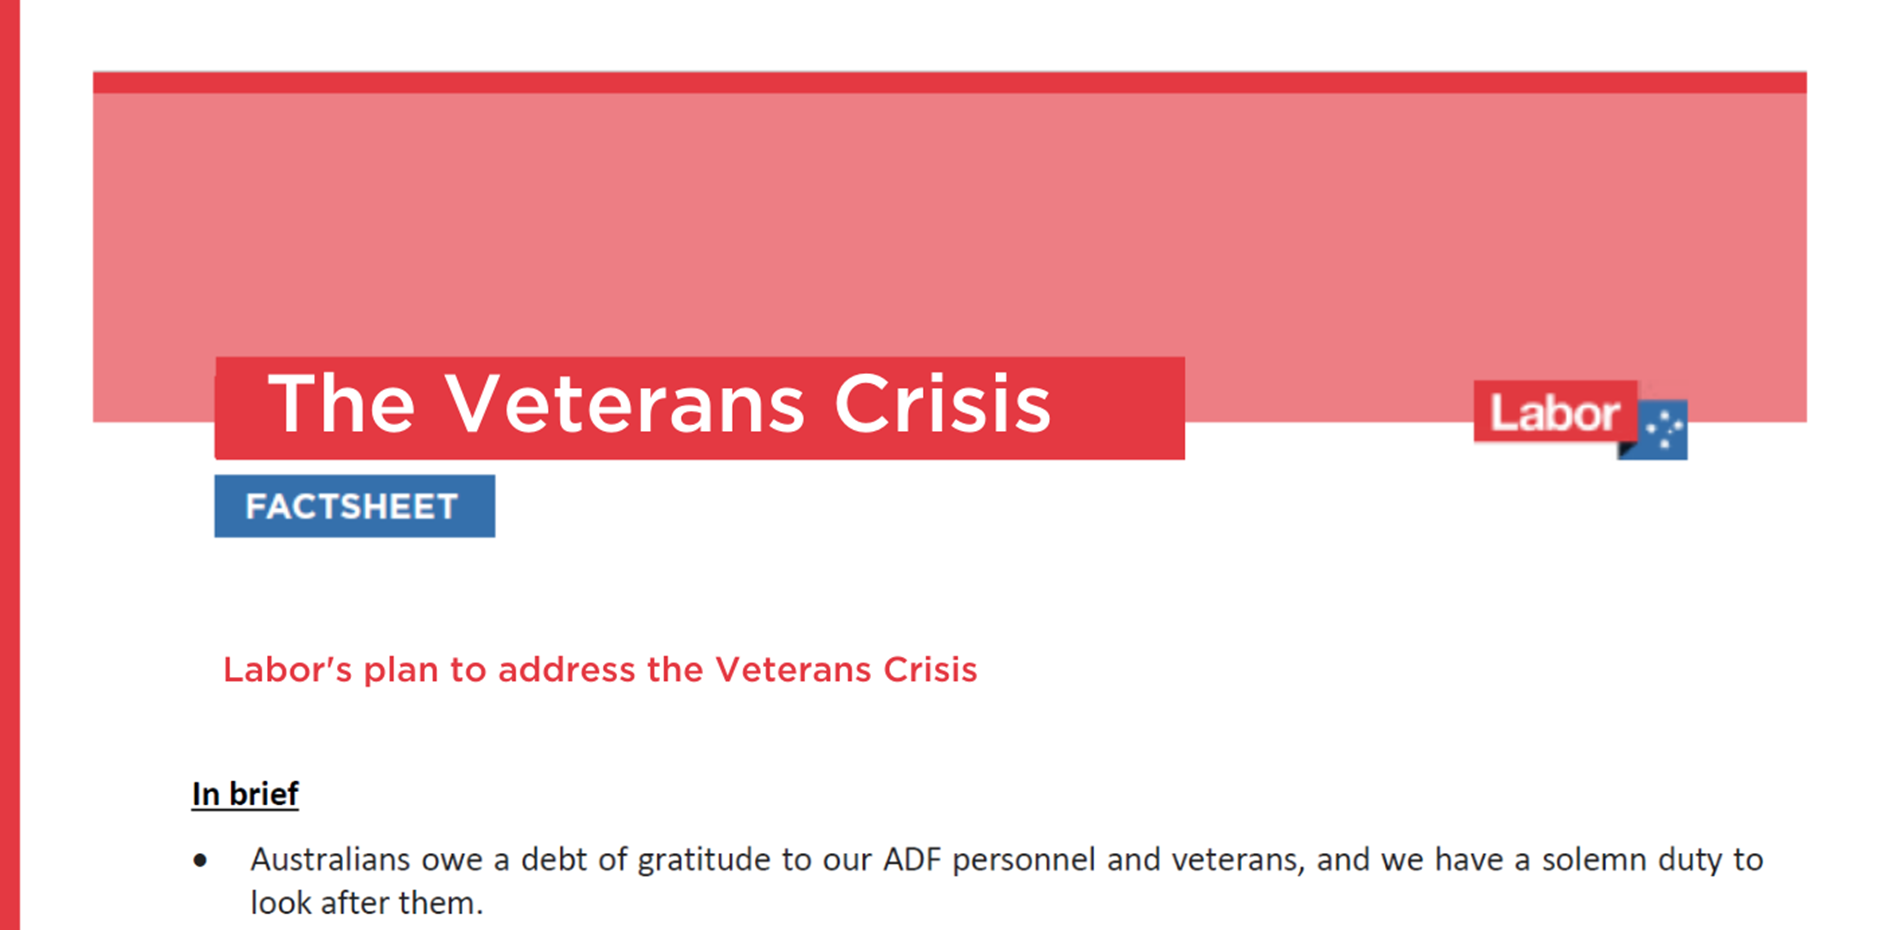 Addressing the Veterans Crisis Main Image